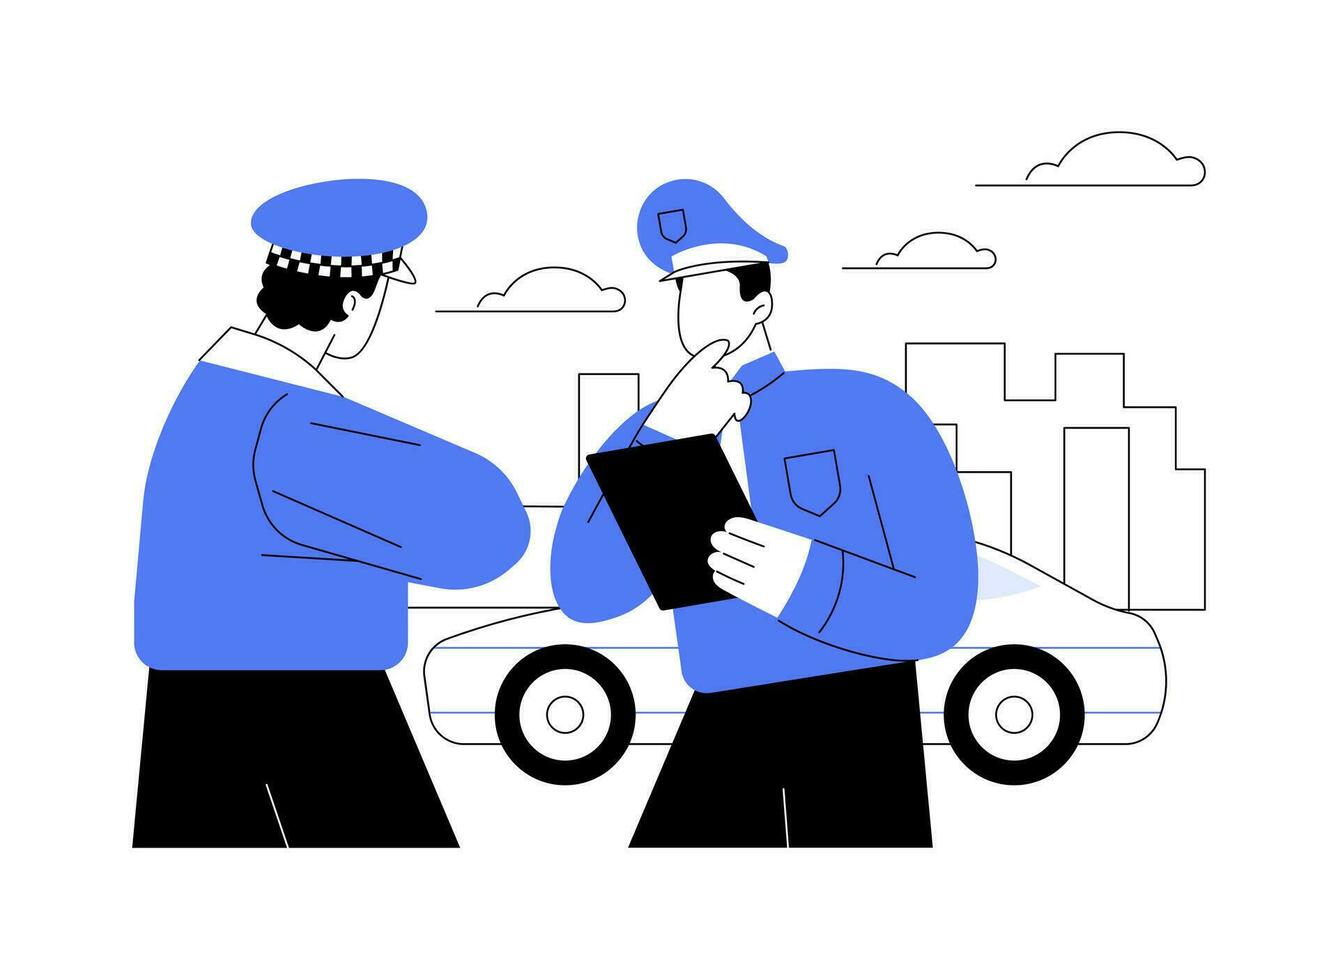 Polizei patrouillieren Auto abstrakt Konzept Vektor Illustration.